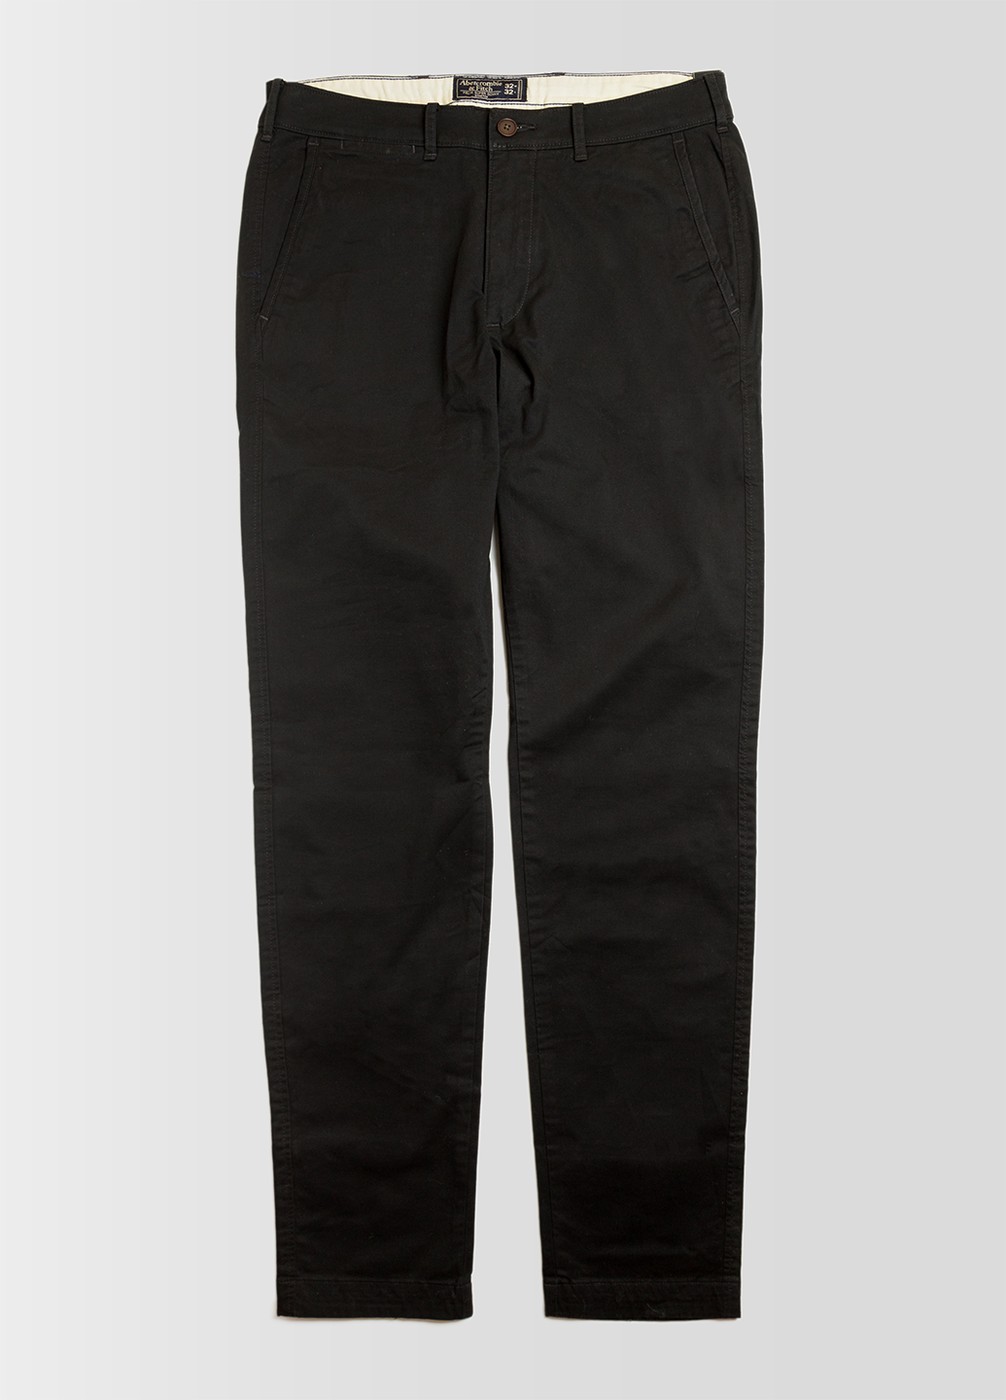 Брюки мужские - брюки Super Skinny Abercrombie & Fitch, 32/32, 32/32